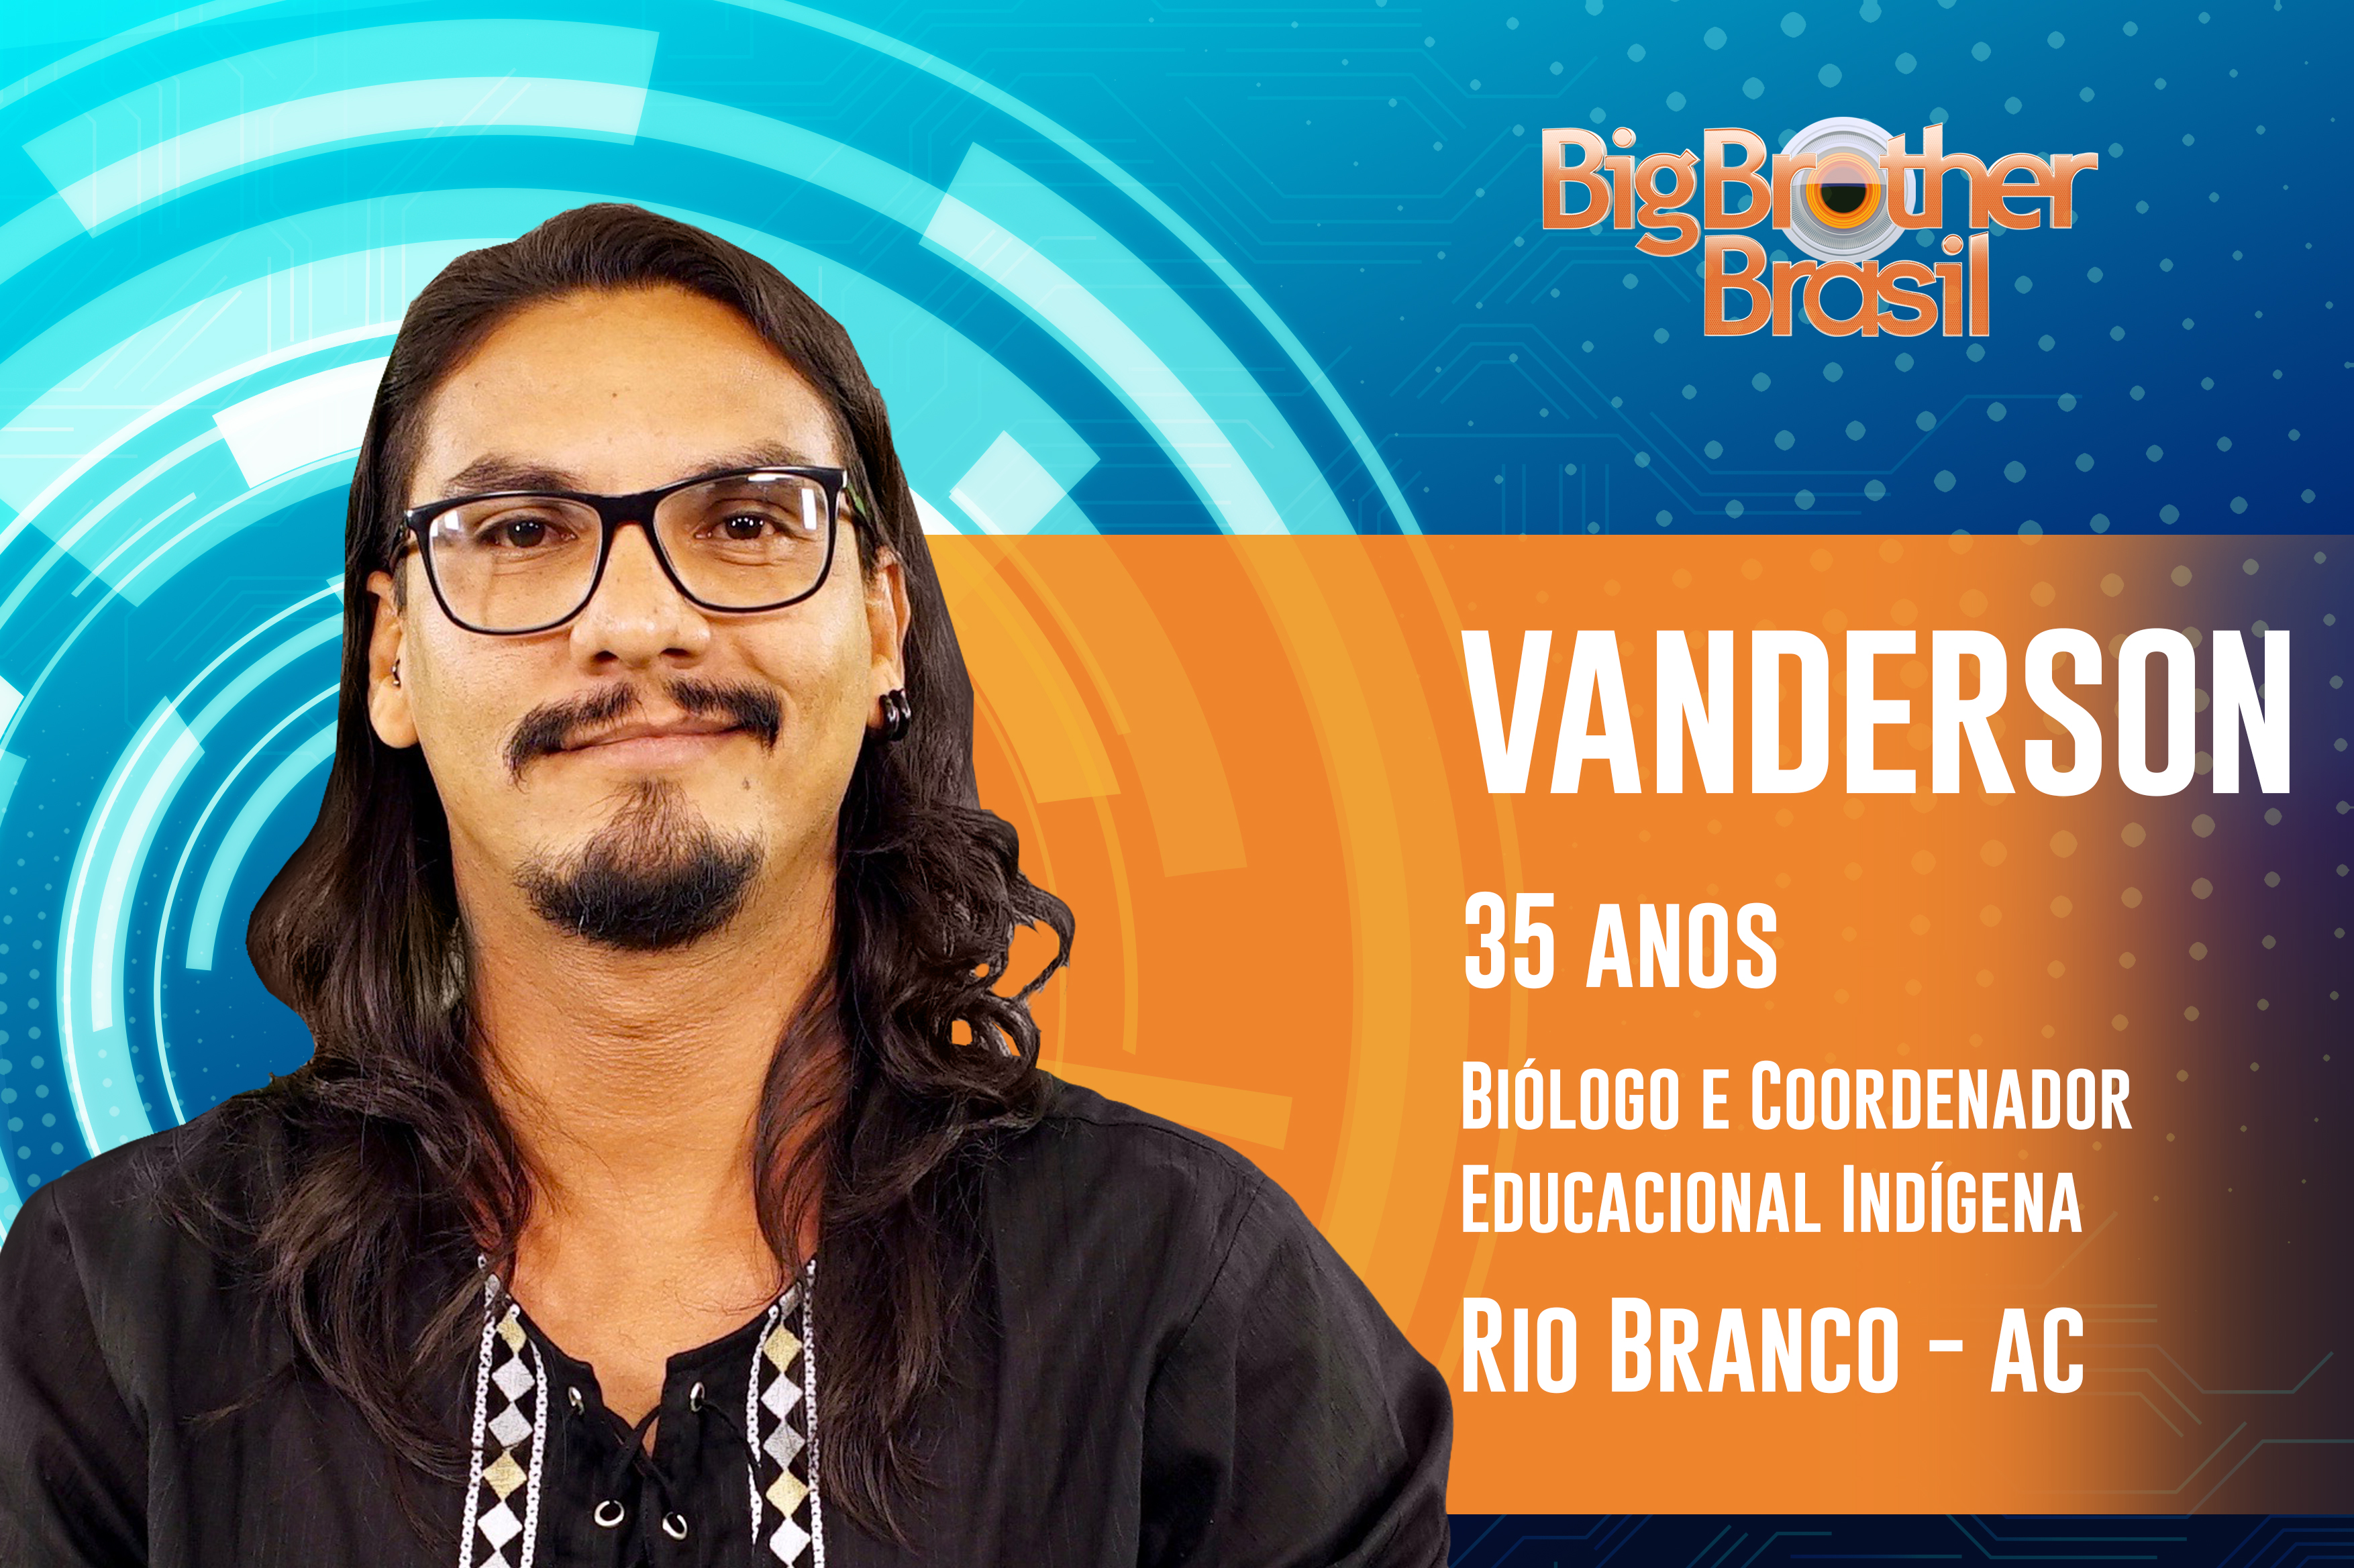 Vanderson, participante do BBB19